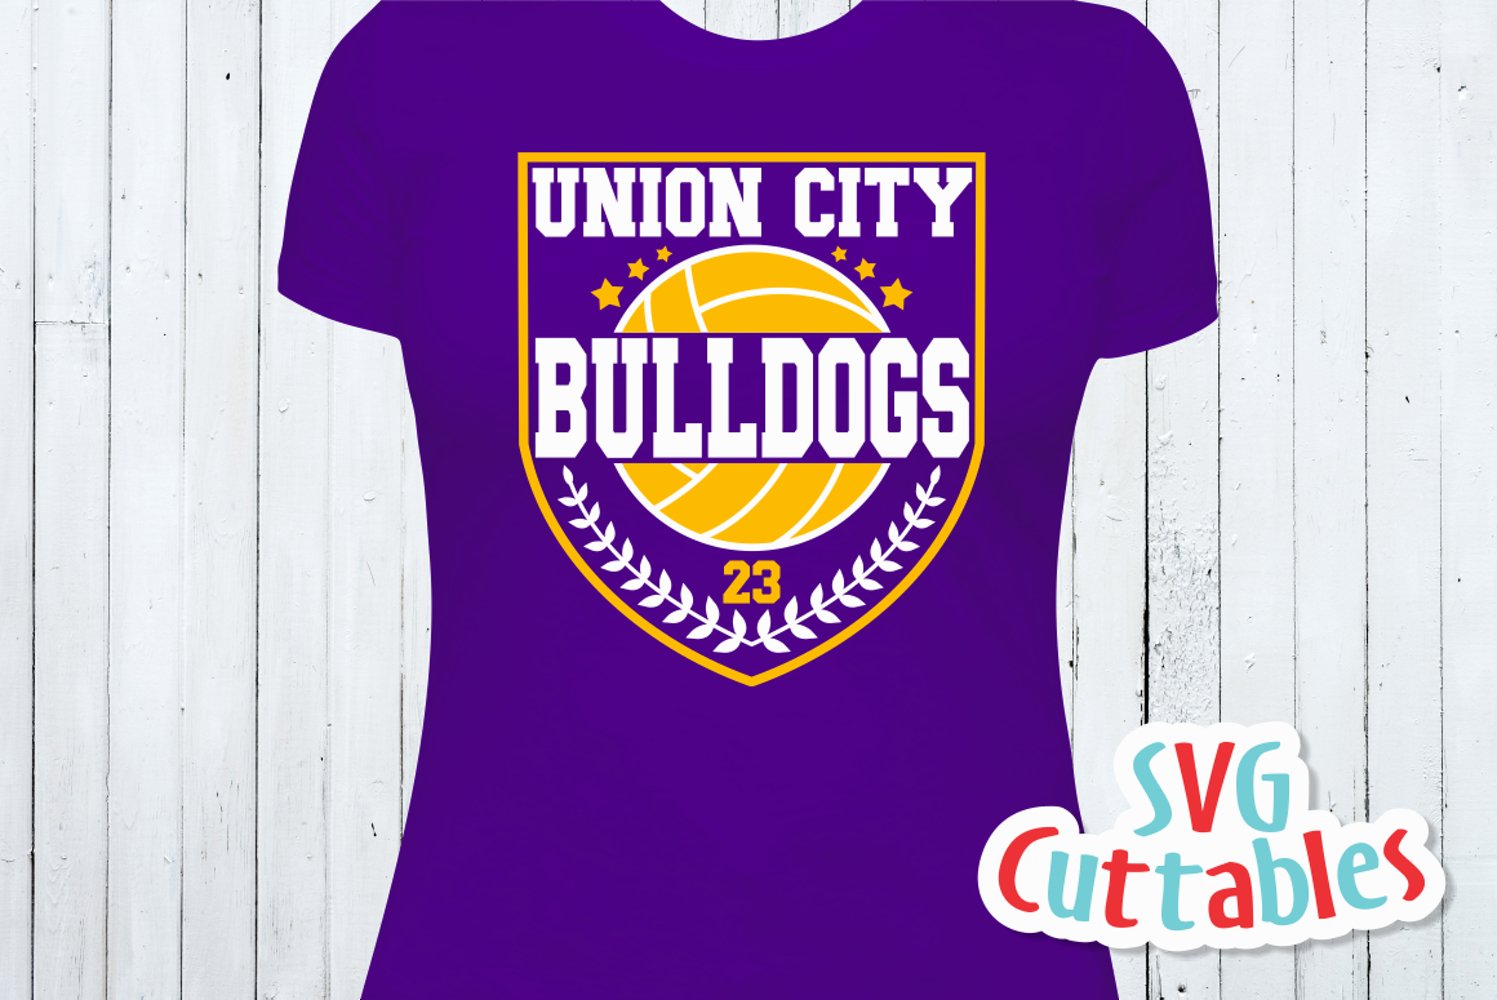 Volleyball purple t-shirt design.